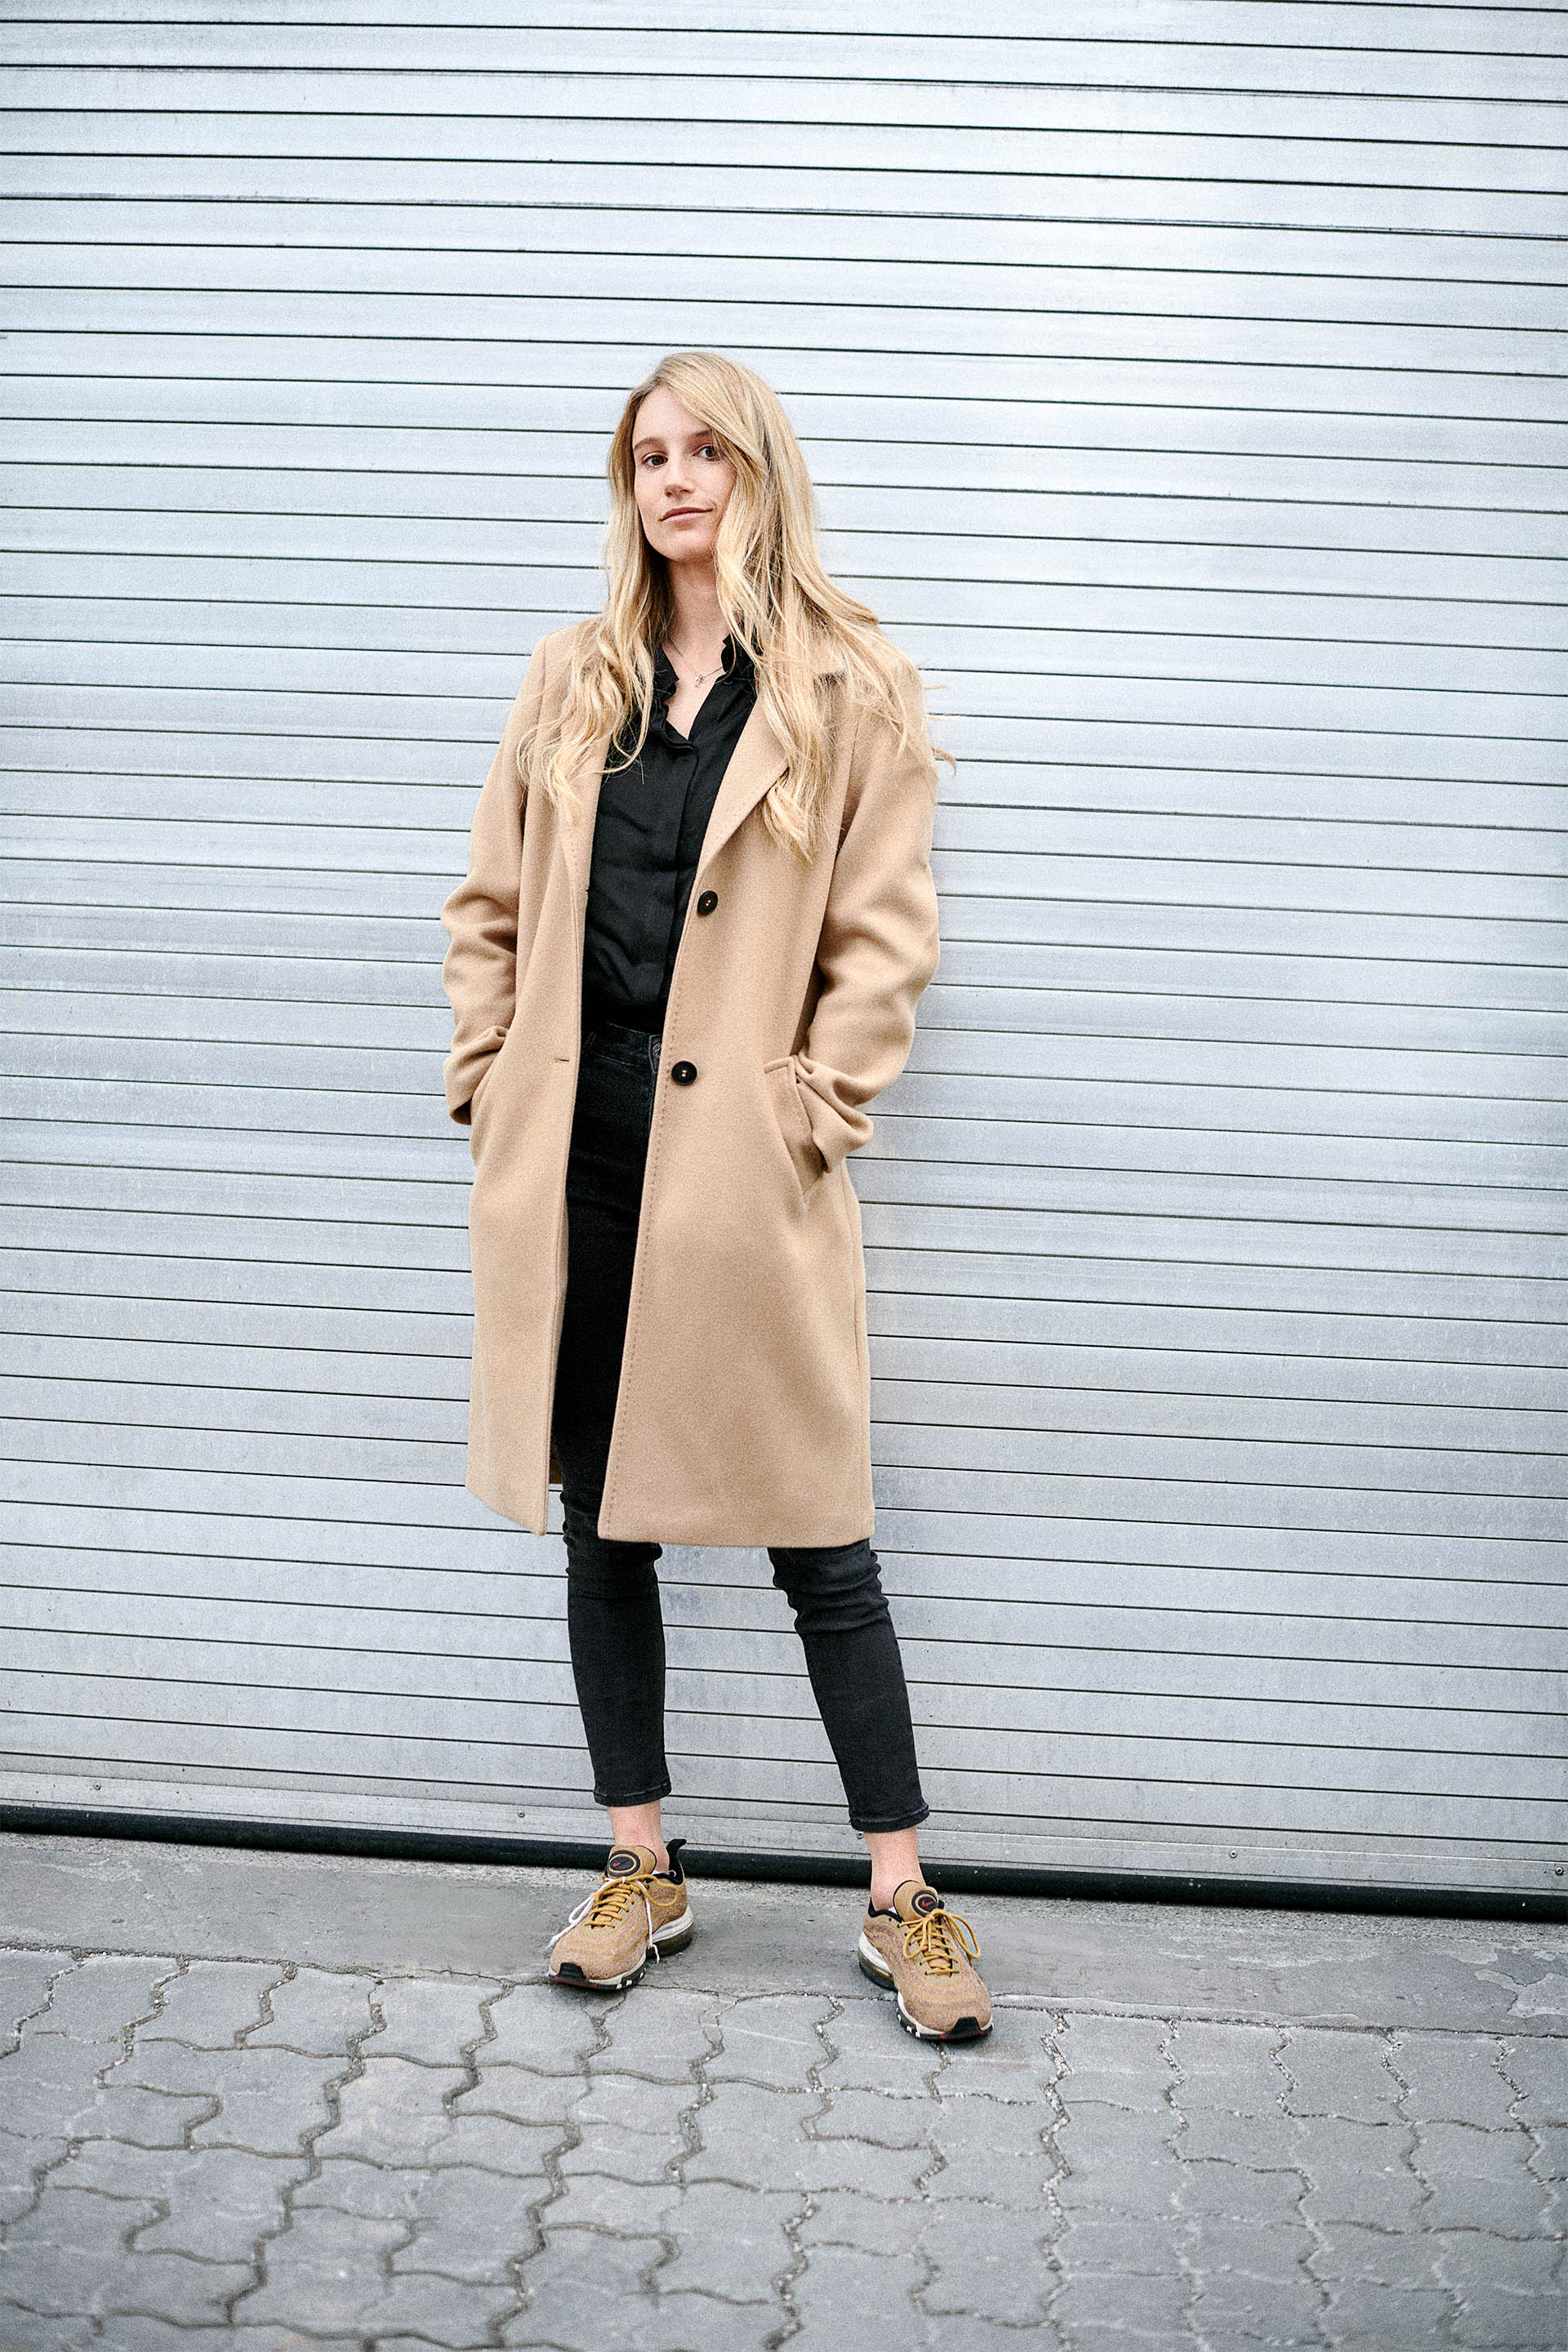 Dressed in a beige coat, Anna Gasser leans against a garage door. 